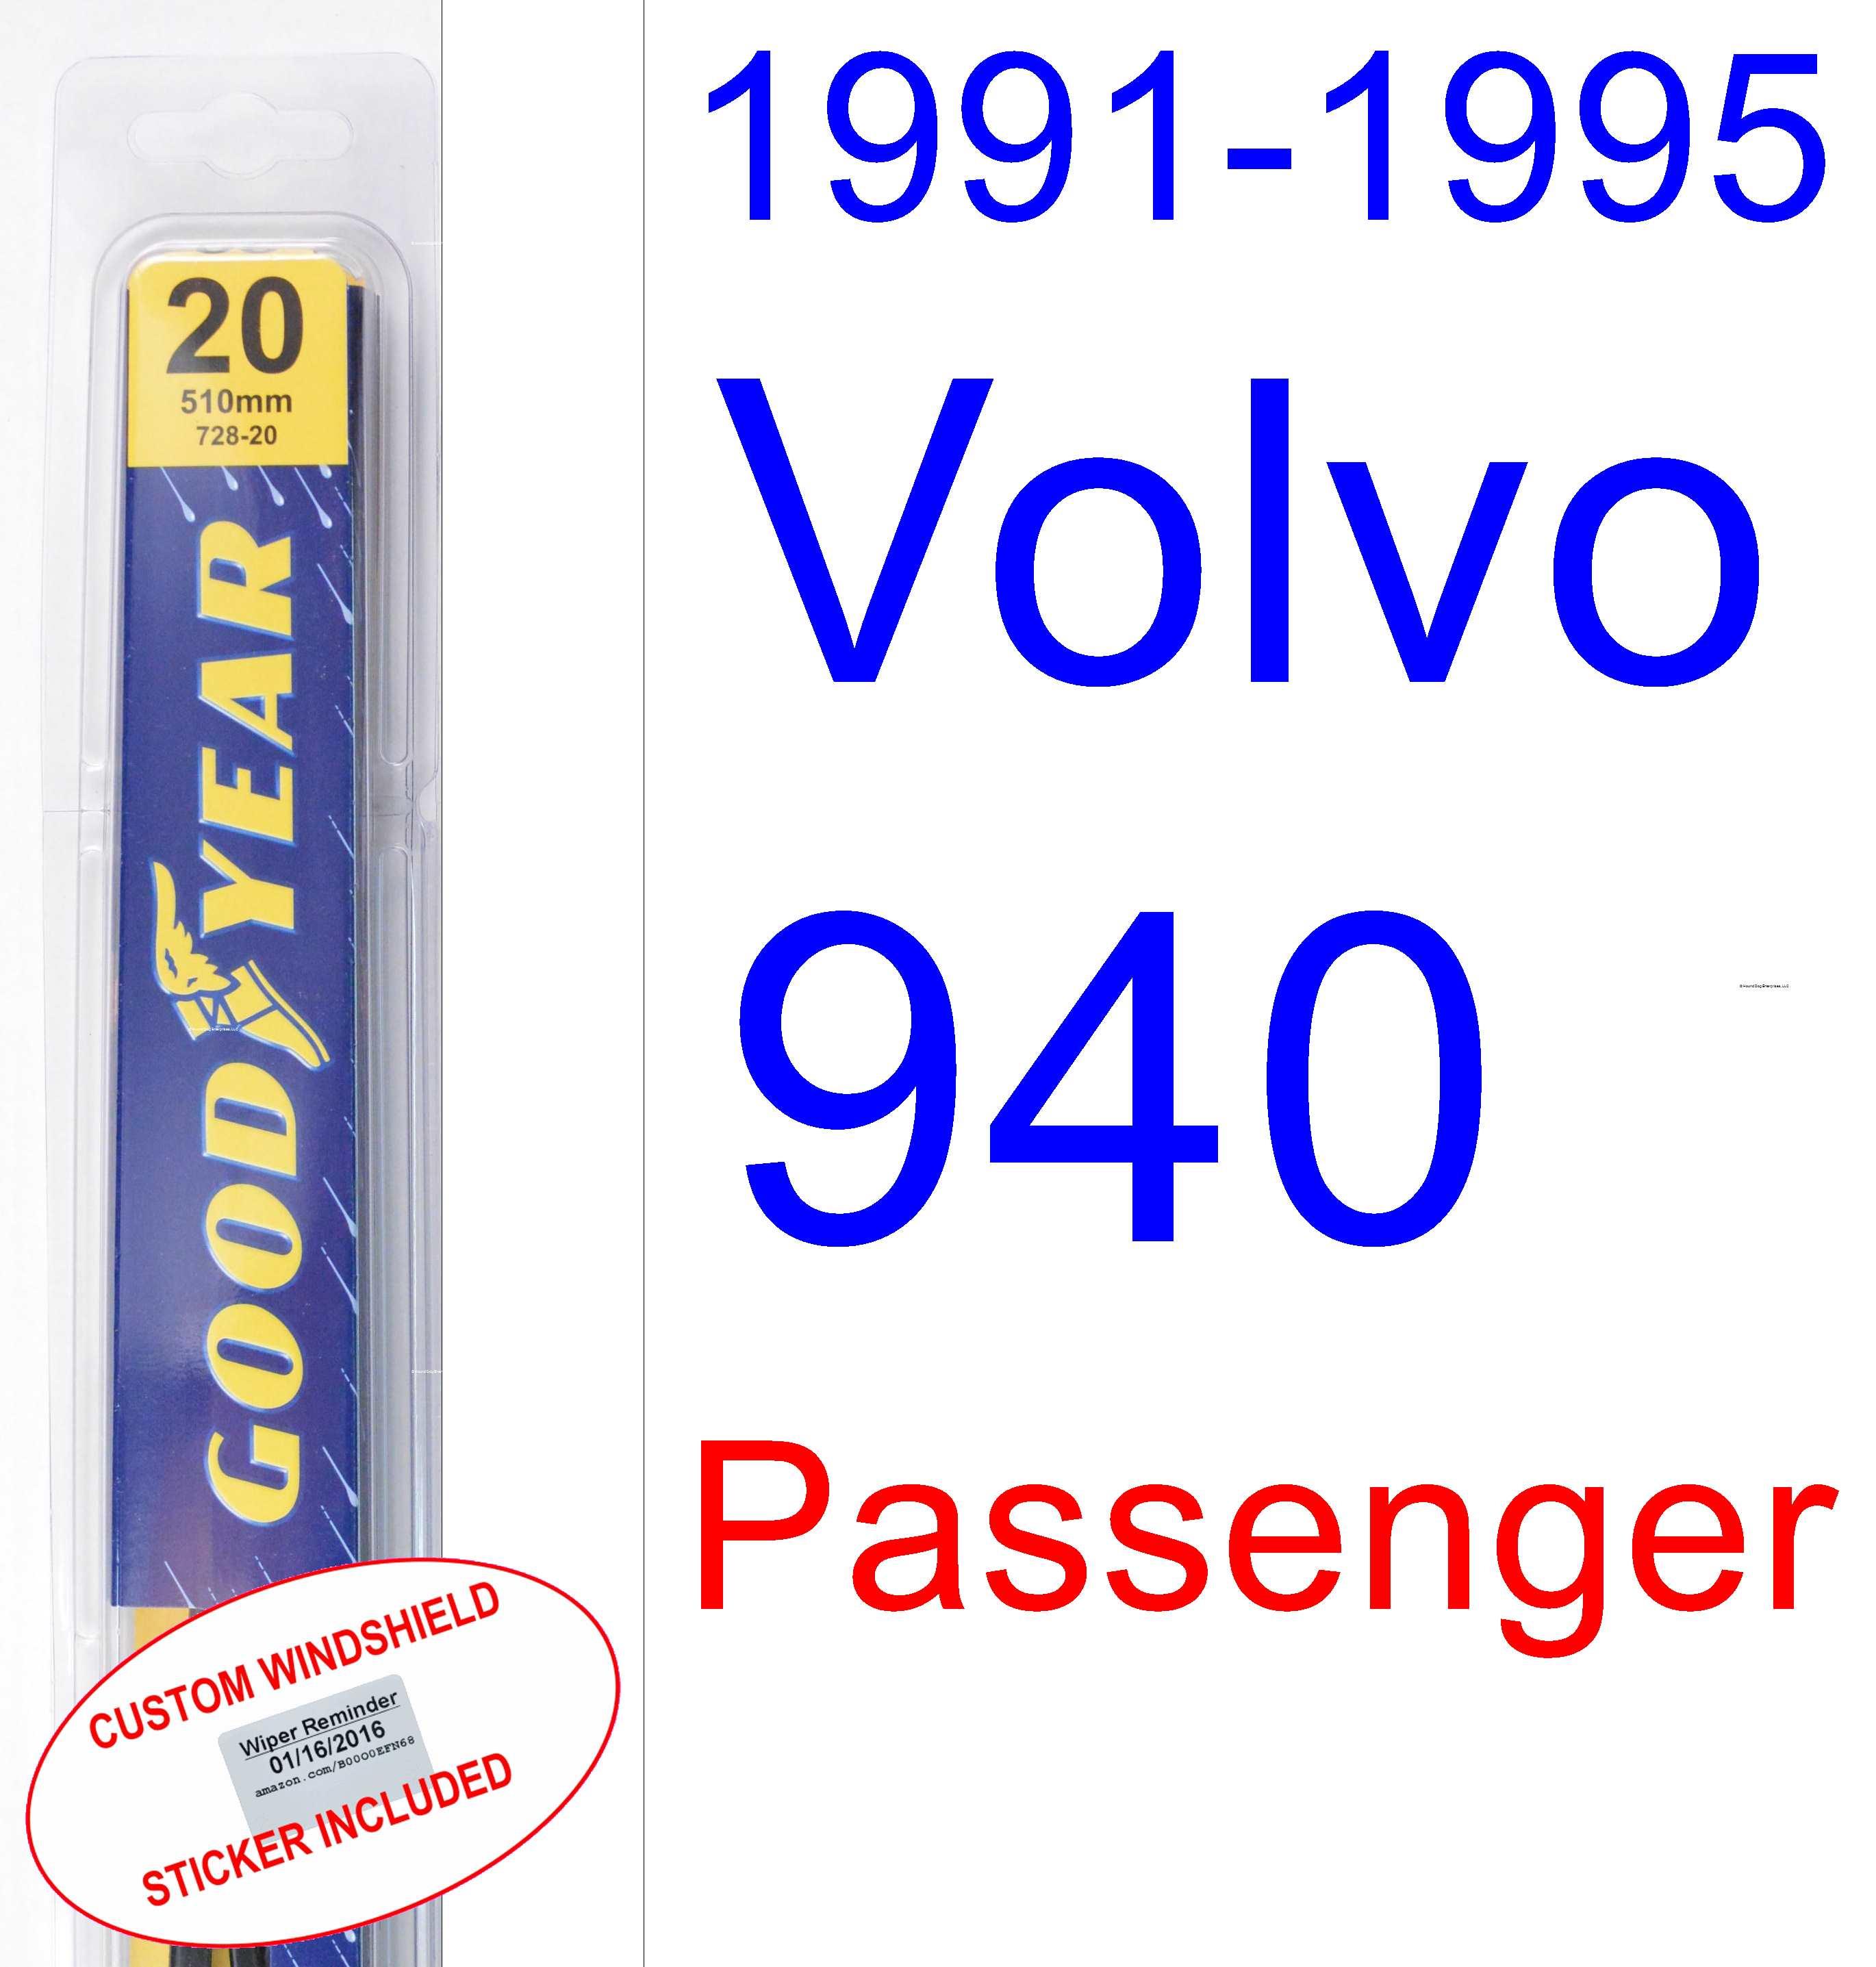 1991 1995 Volvo 940 Replacement Wiper Blade Set/Kit (Set of 2 Blades) (1992,1993,1994)